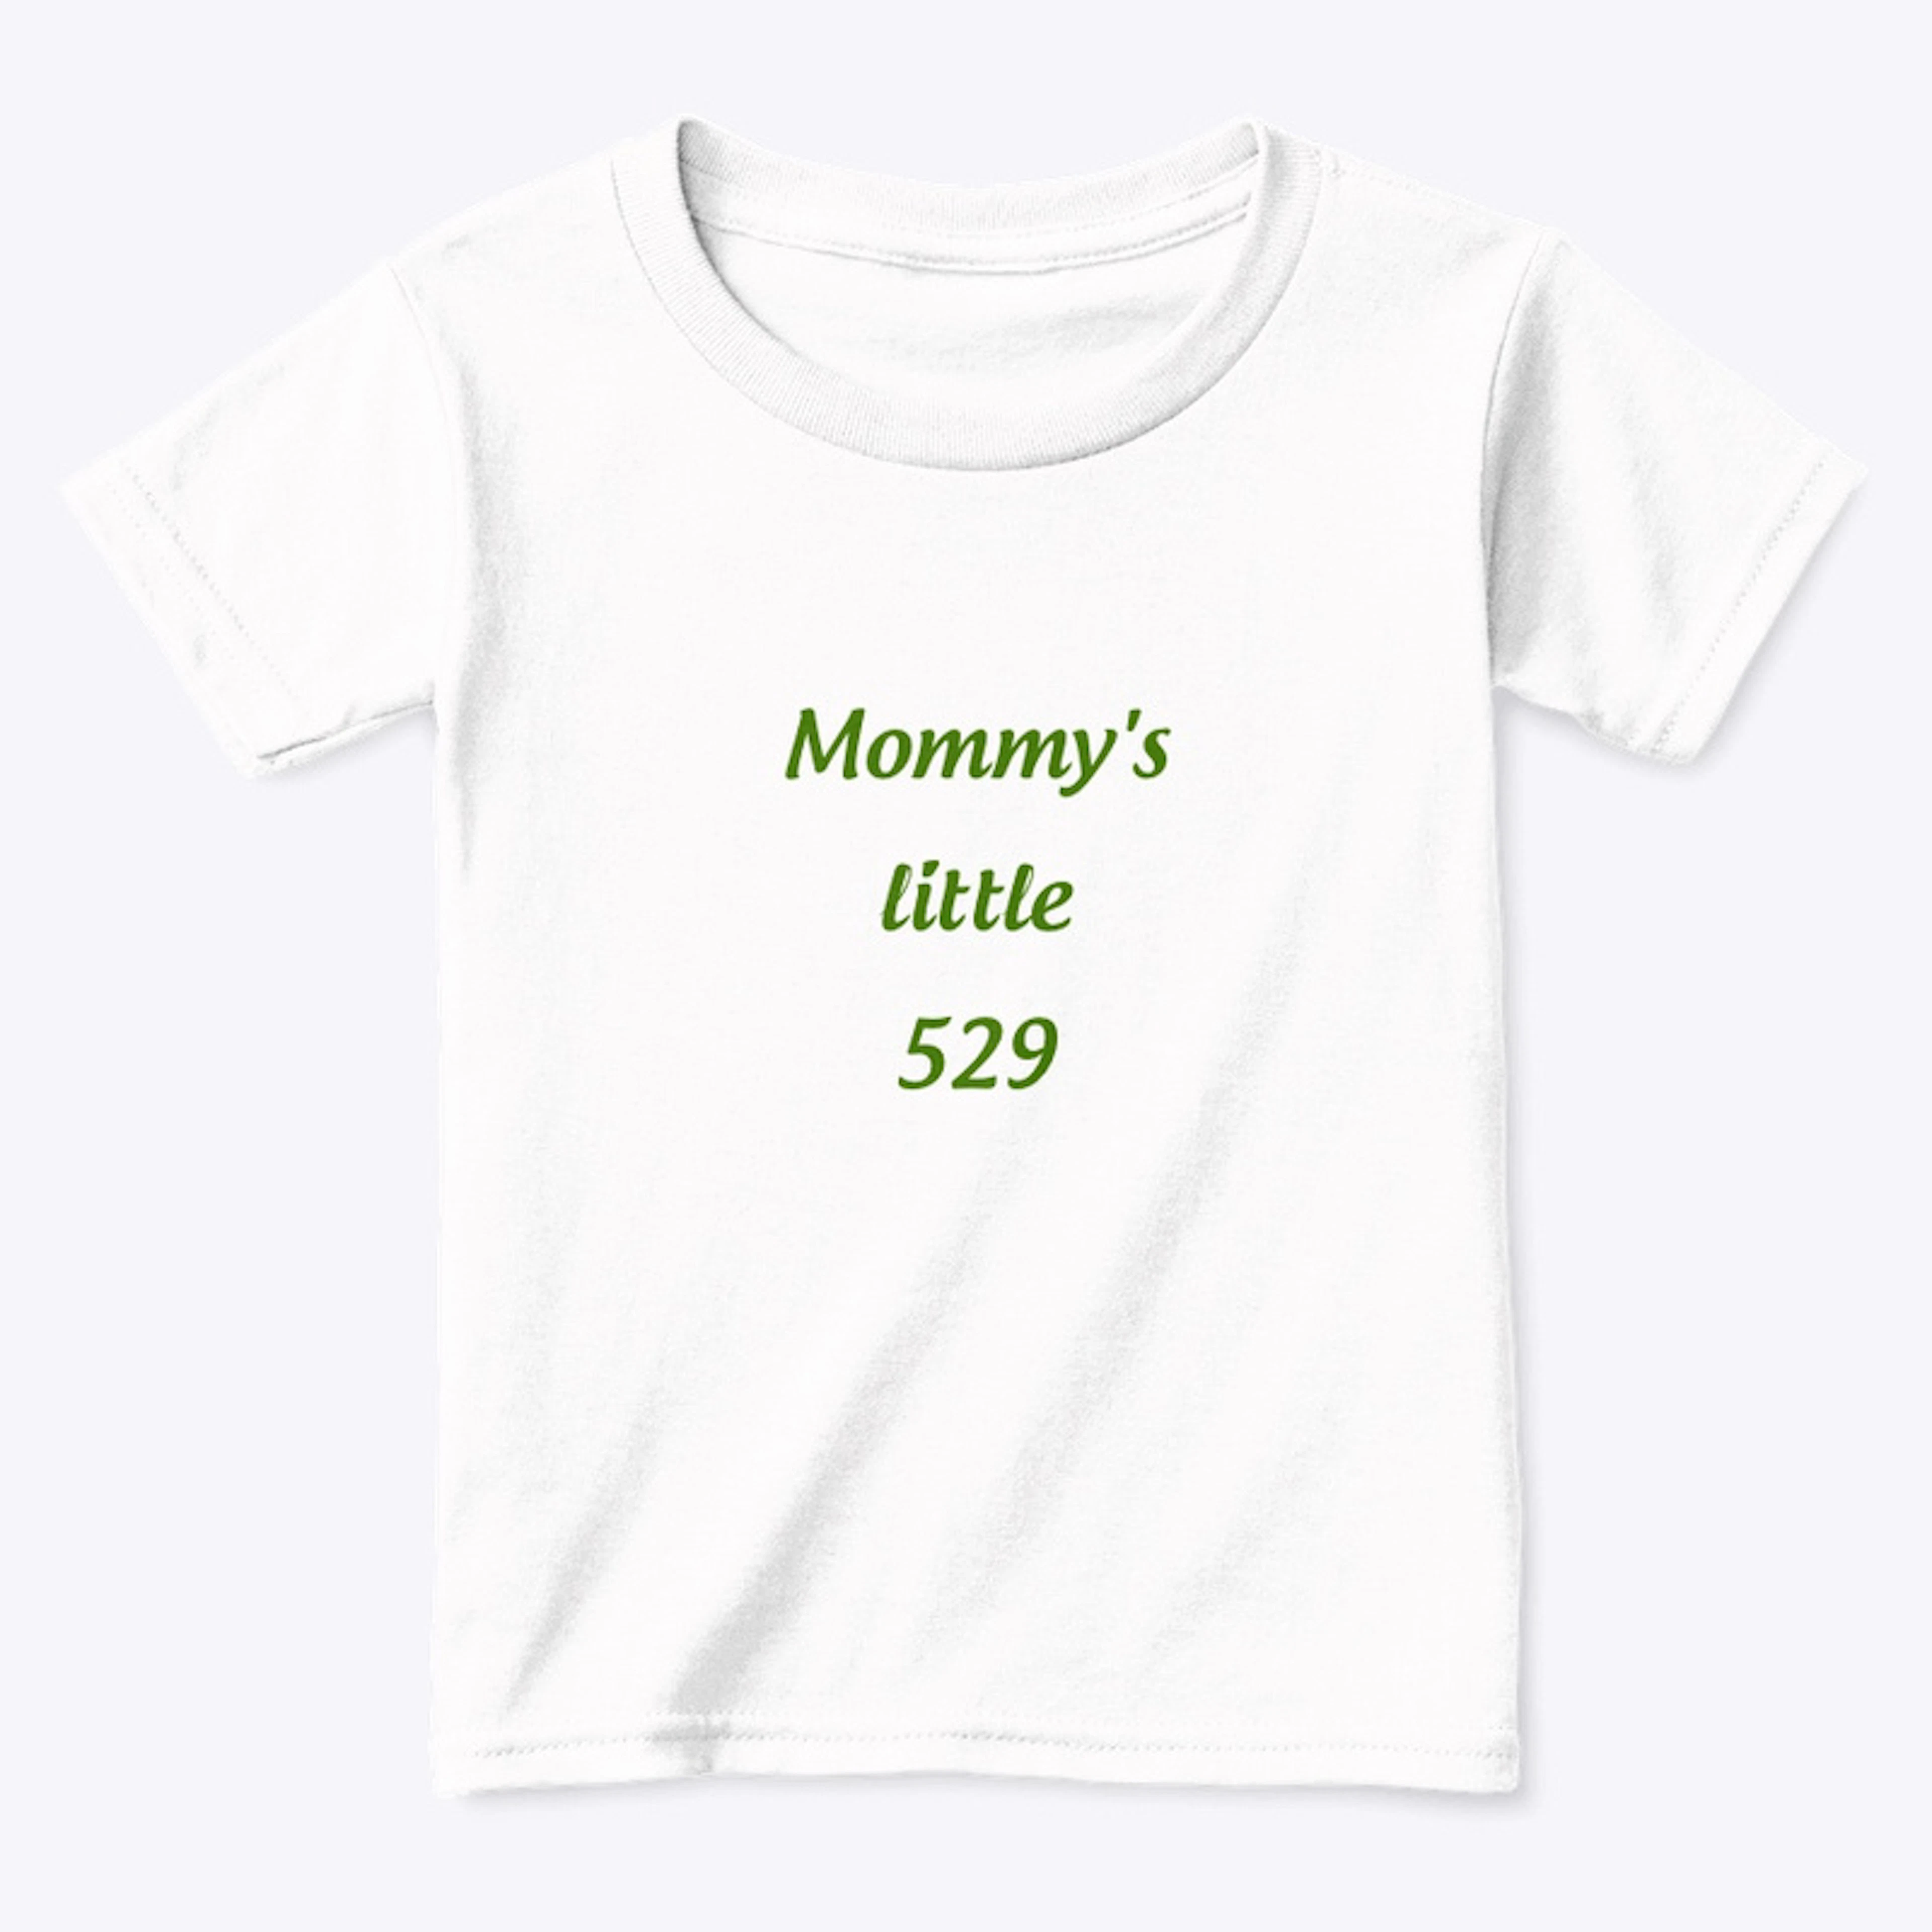 Mommy's little 529